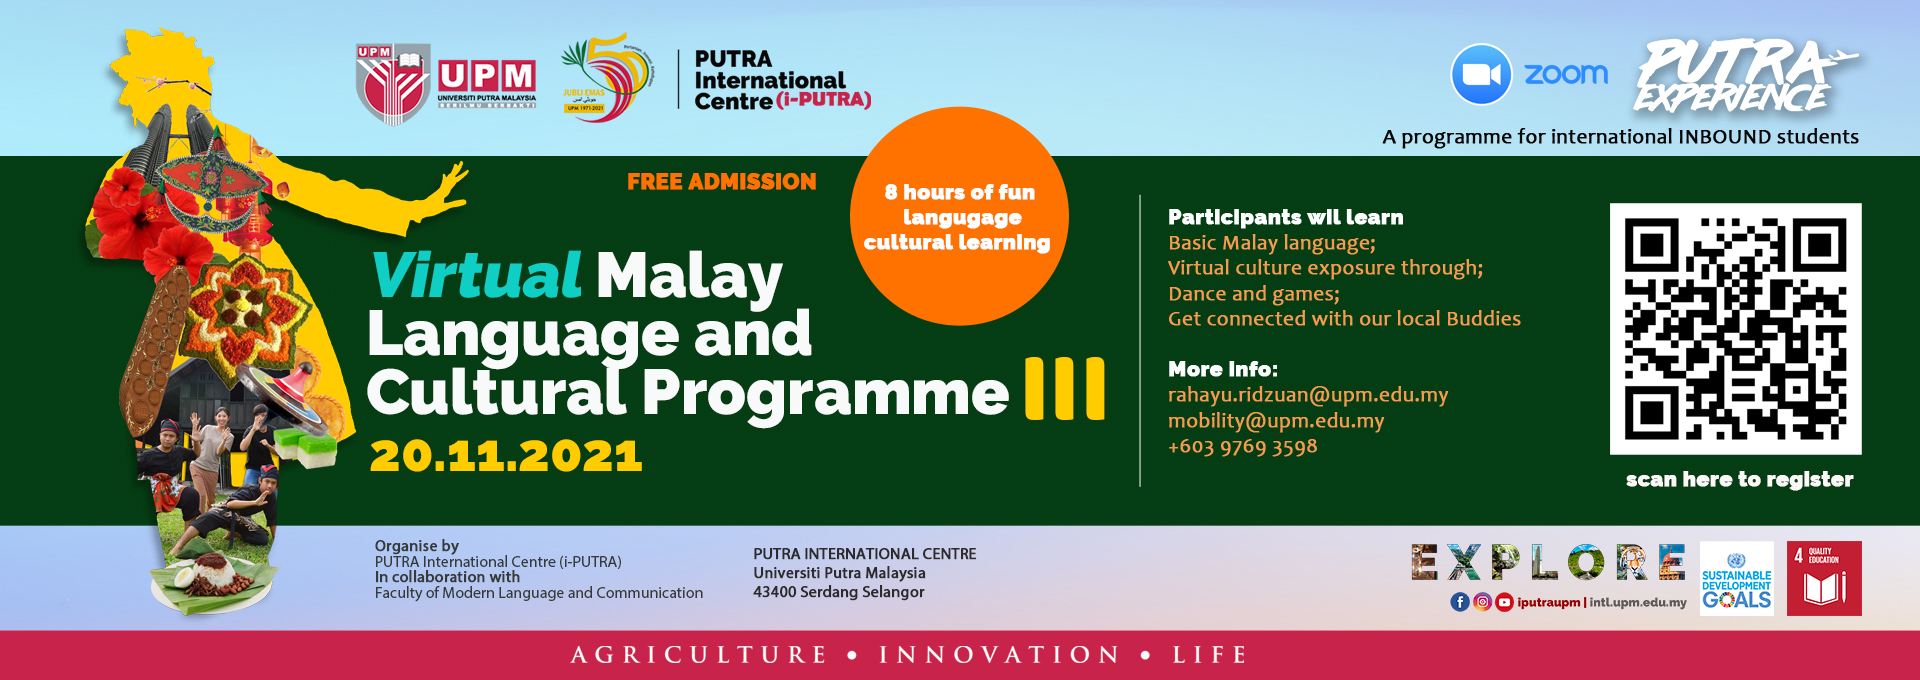 Virtual Malay Language and Cultural Programme III